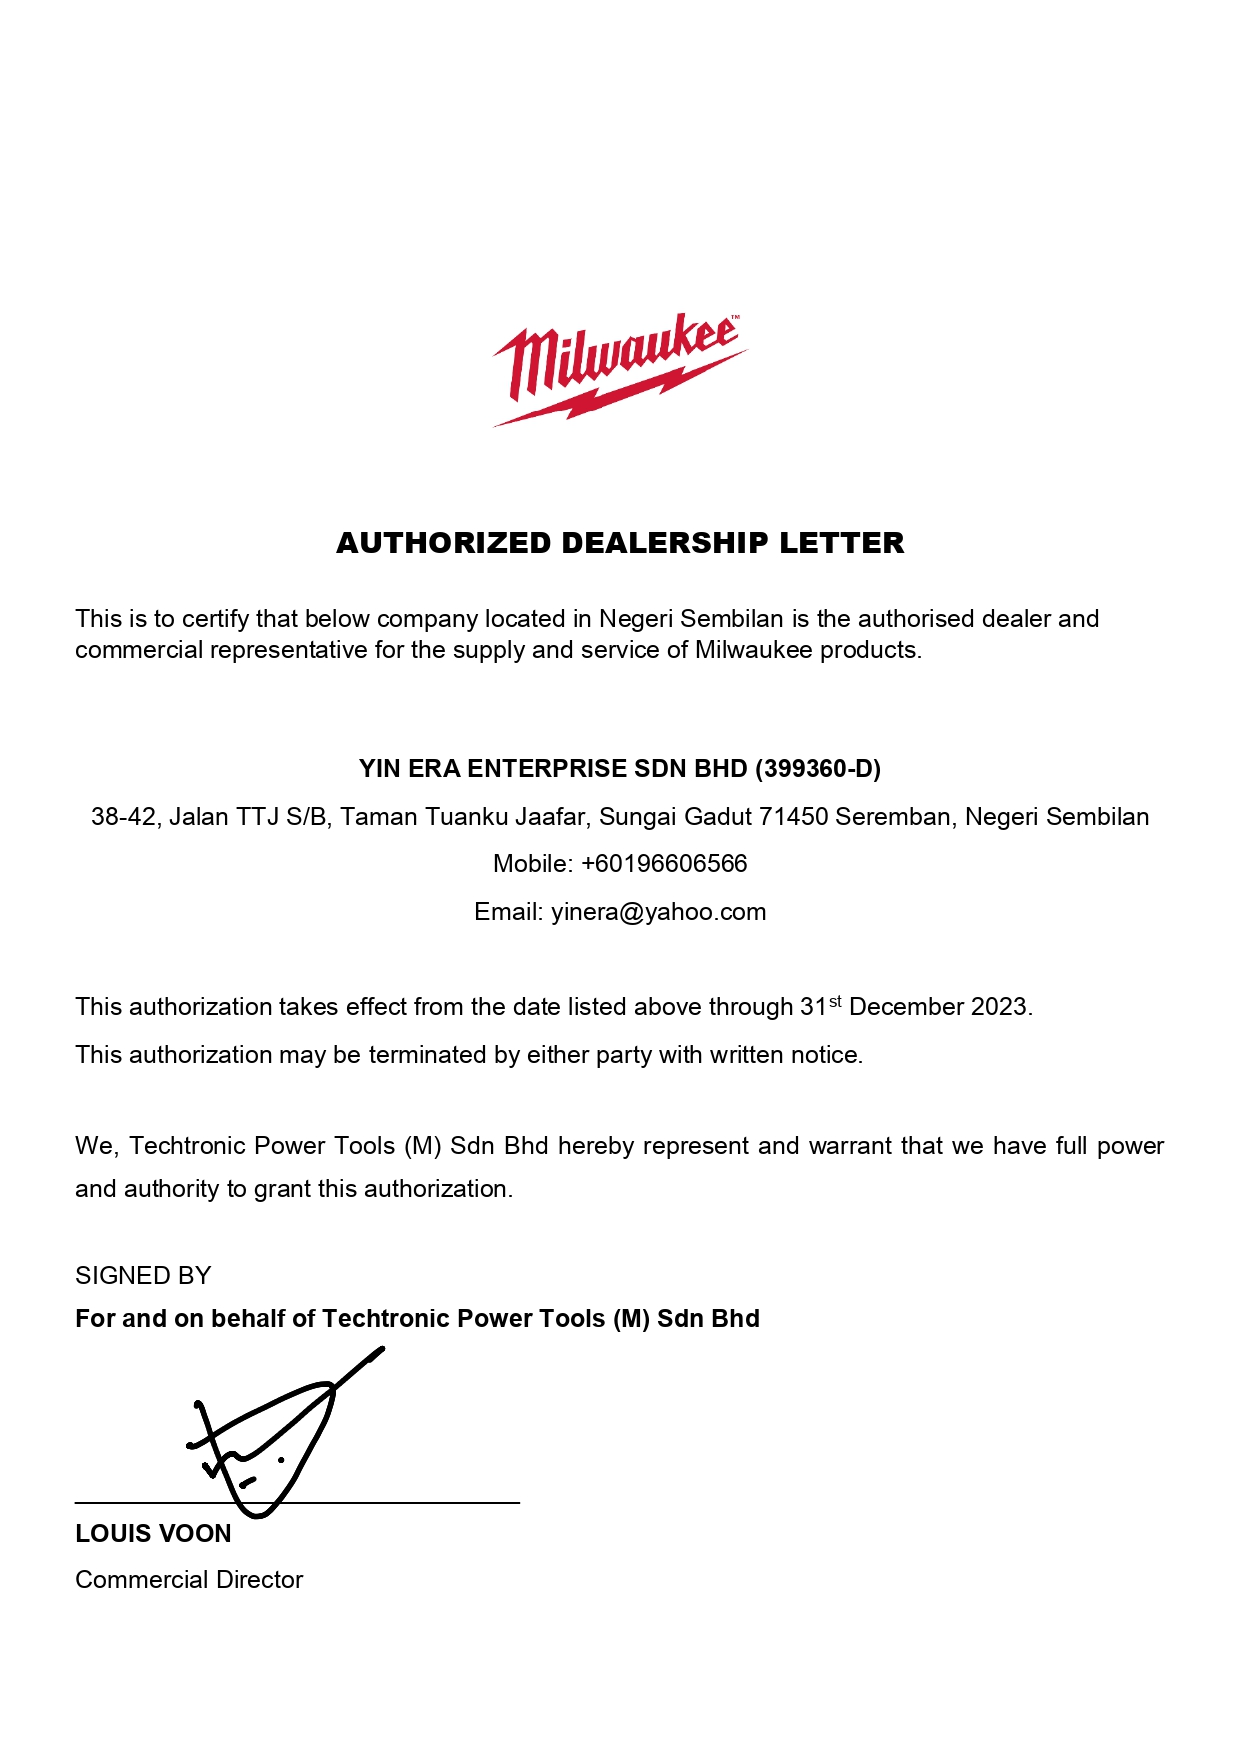 Authorized Dealership Letter - Yin Era Enterprise Sdn Bhd_page-0001